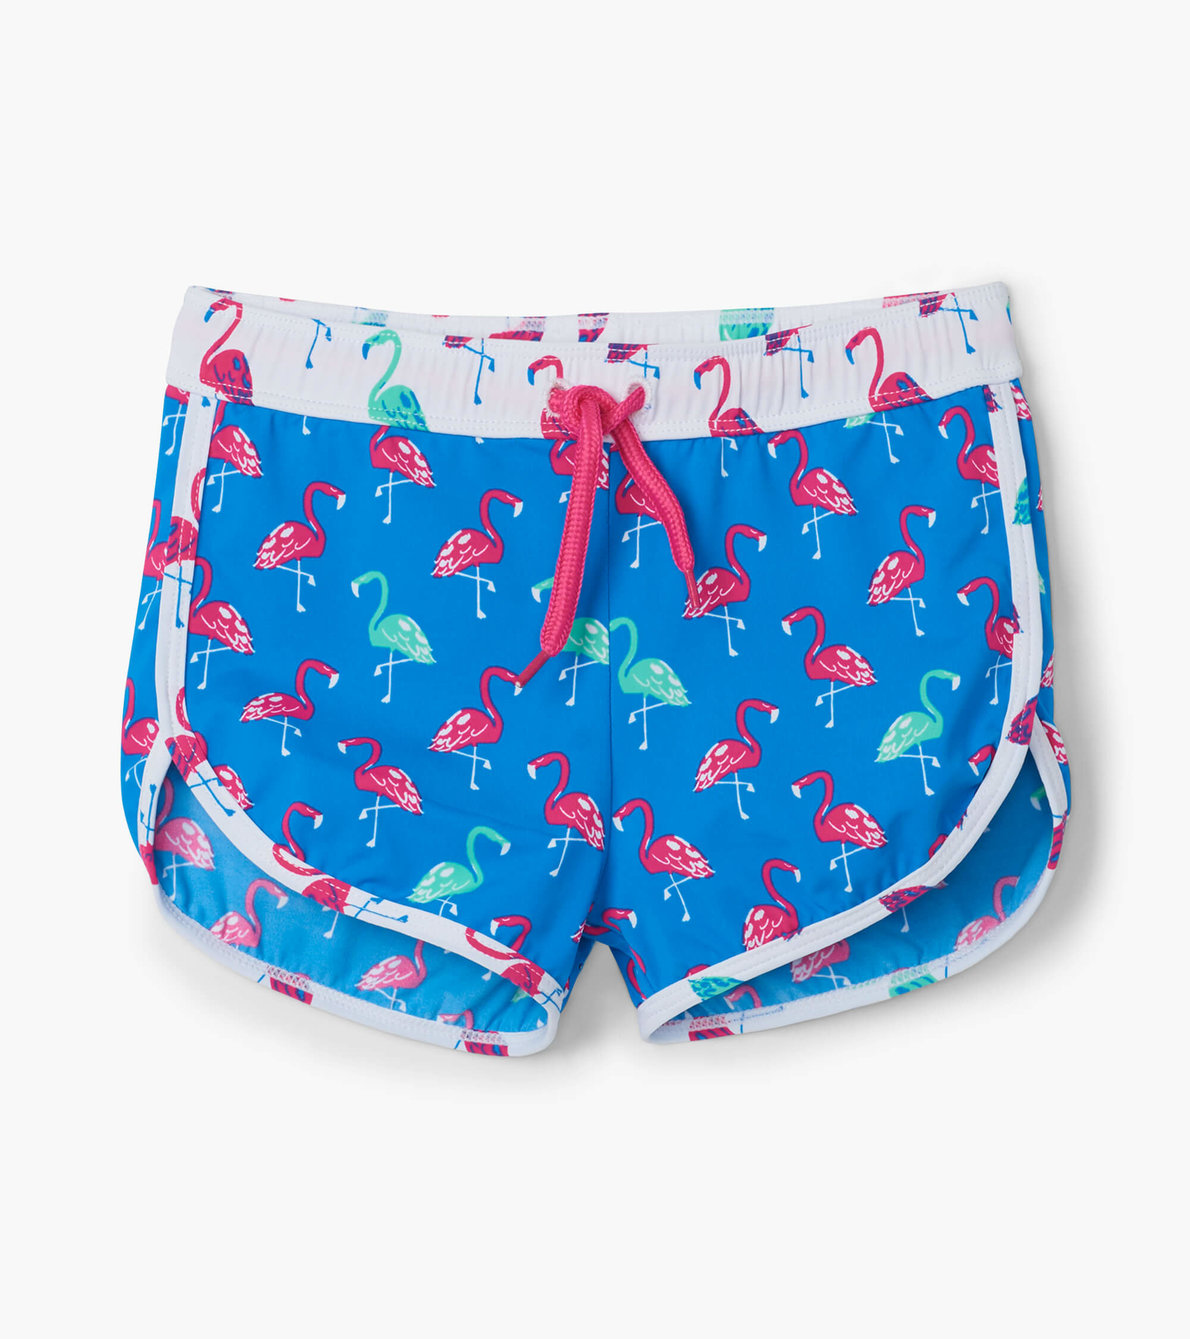 View larger image of Fancy Flamingos Swim Shorts